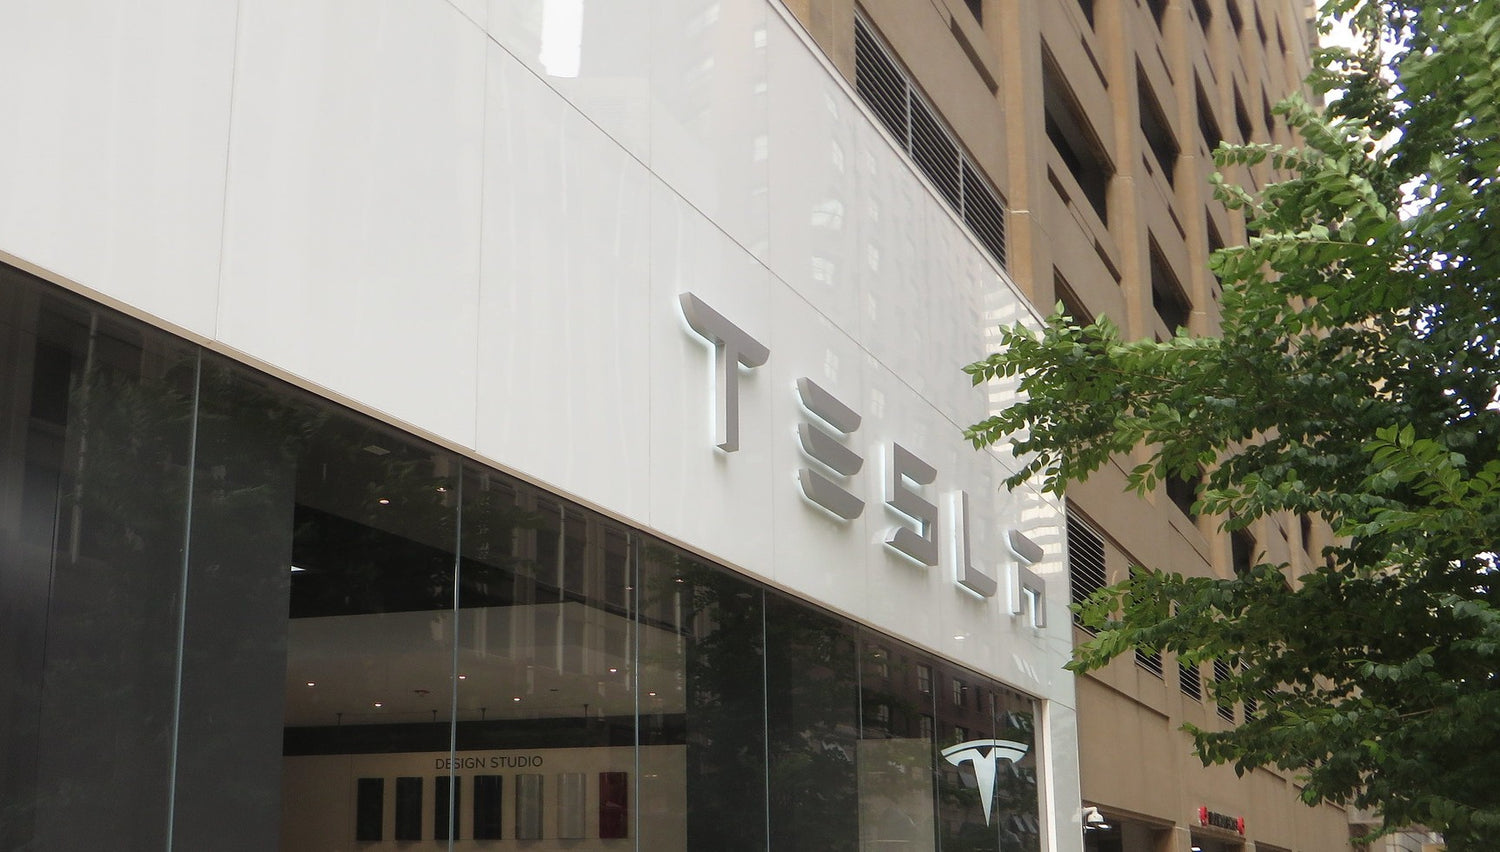 Tesla (TSLA) Stock Split Worth Discussing At Shareholders Meeting 2020, Says Elon Musk